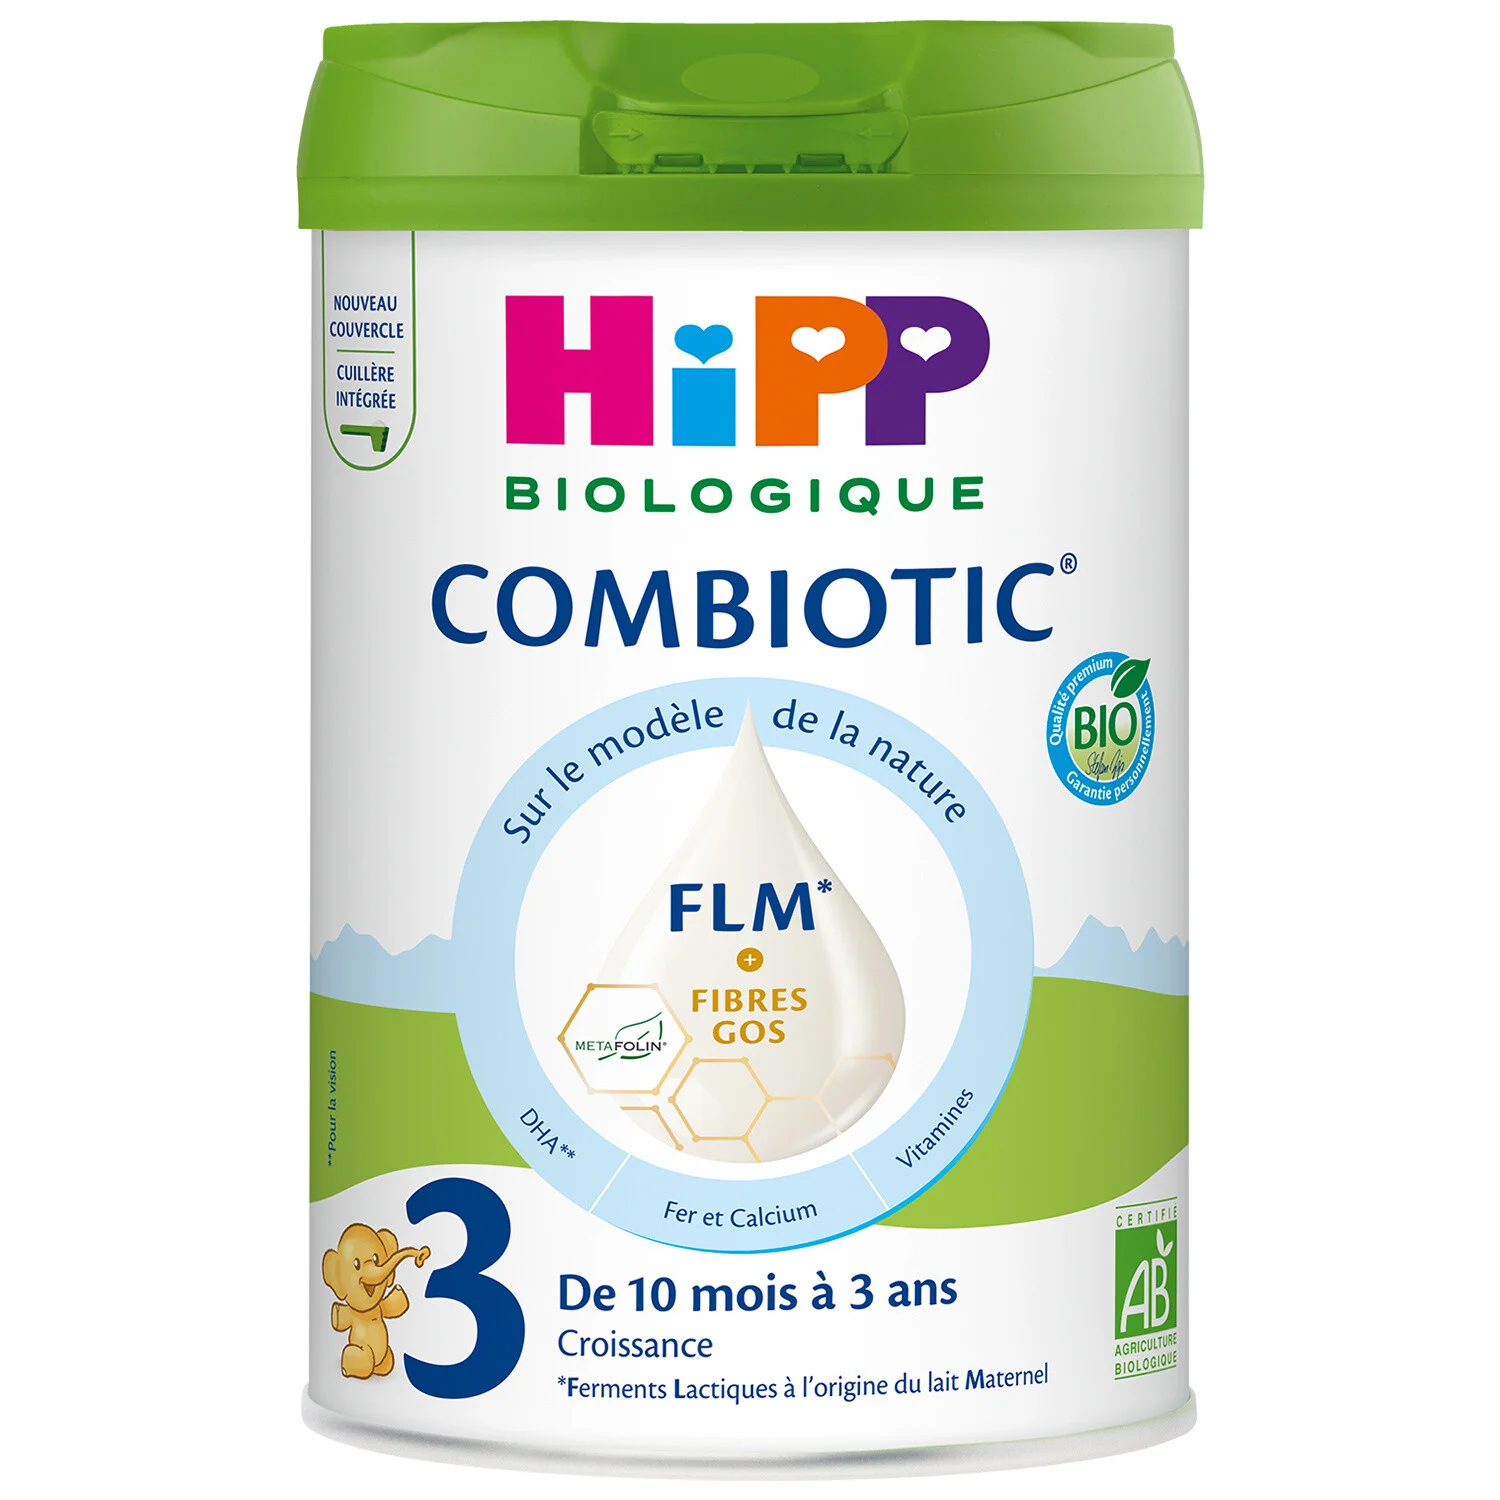 800g Combiotic 3 Flm Hipp